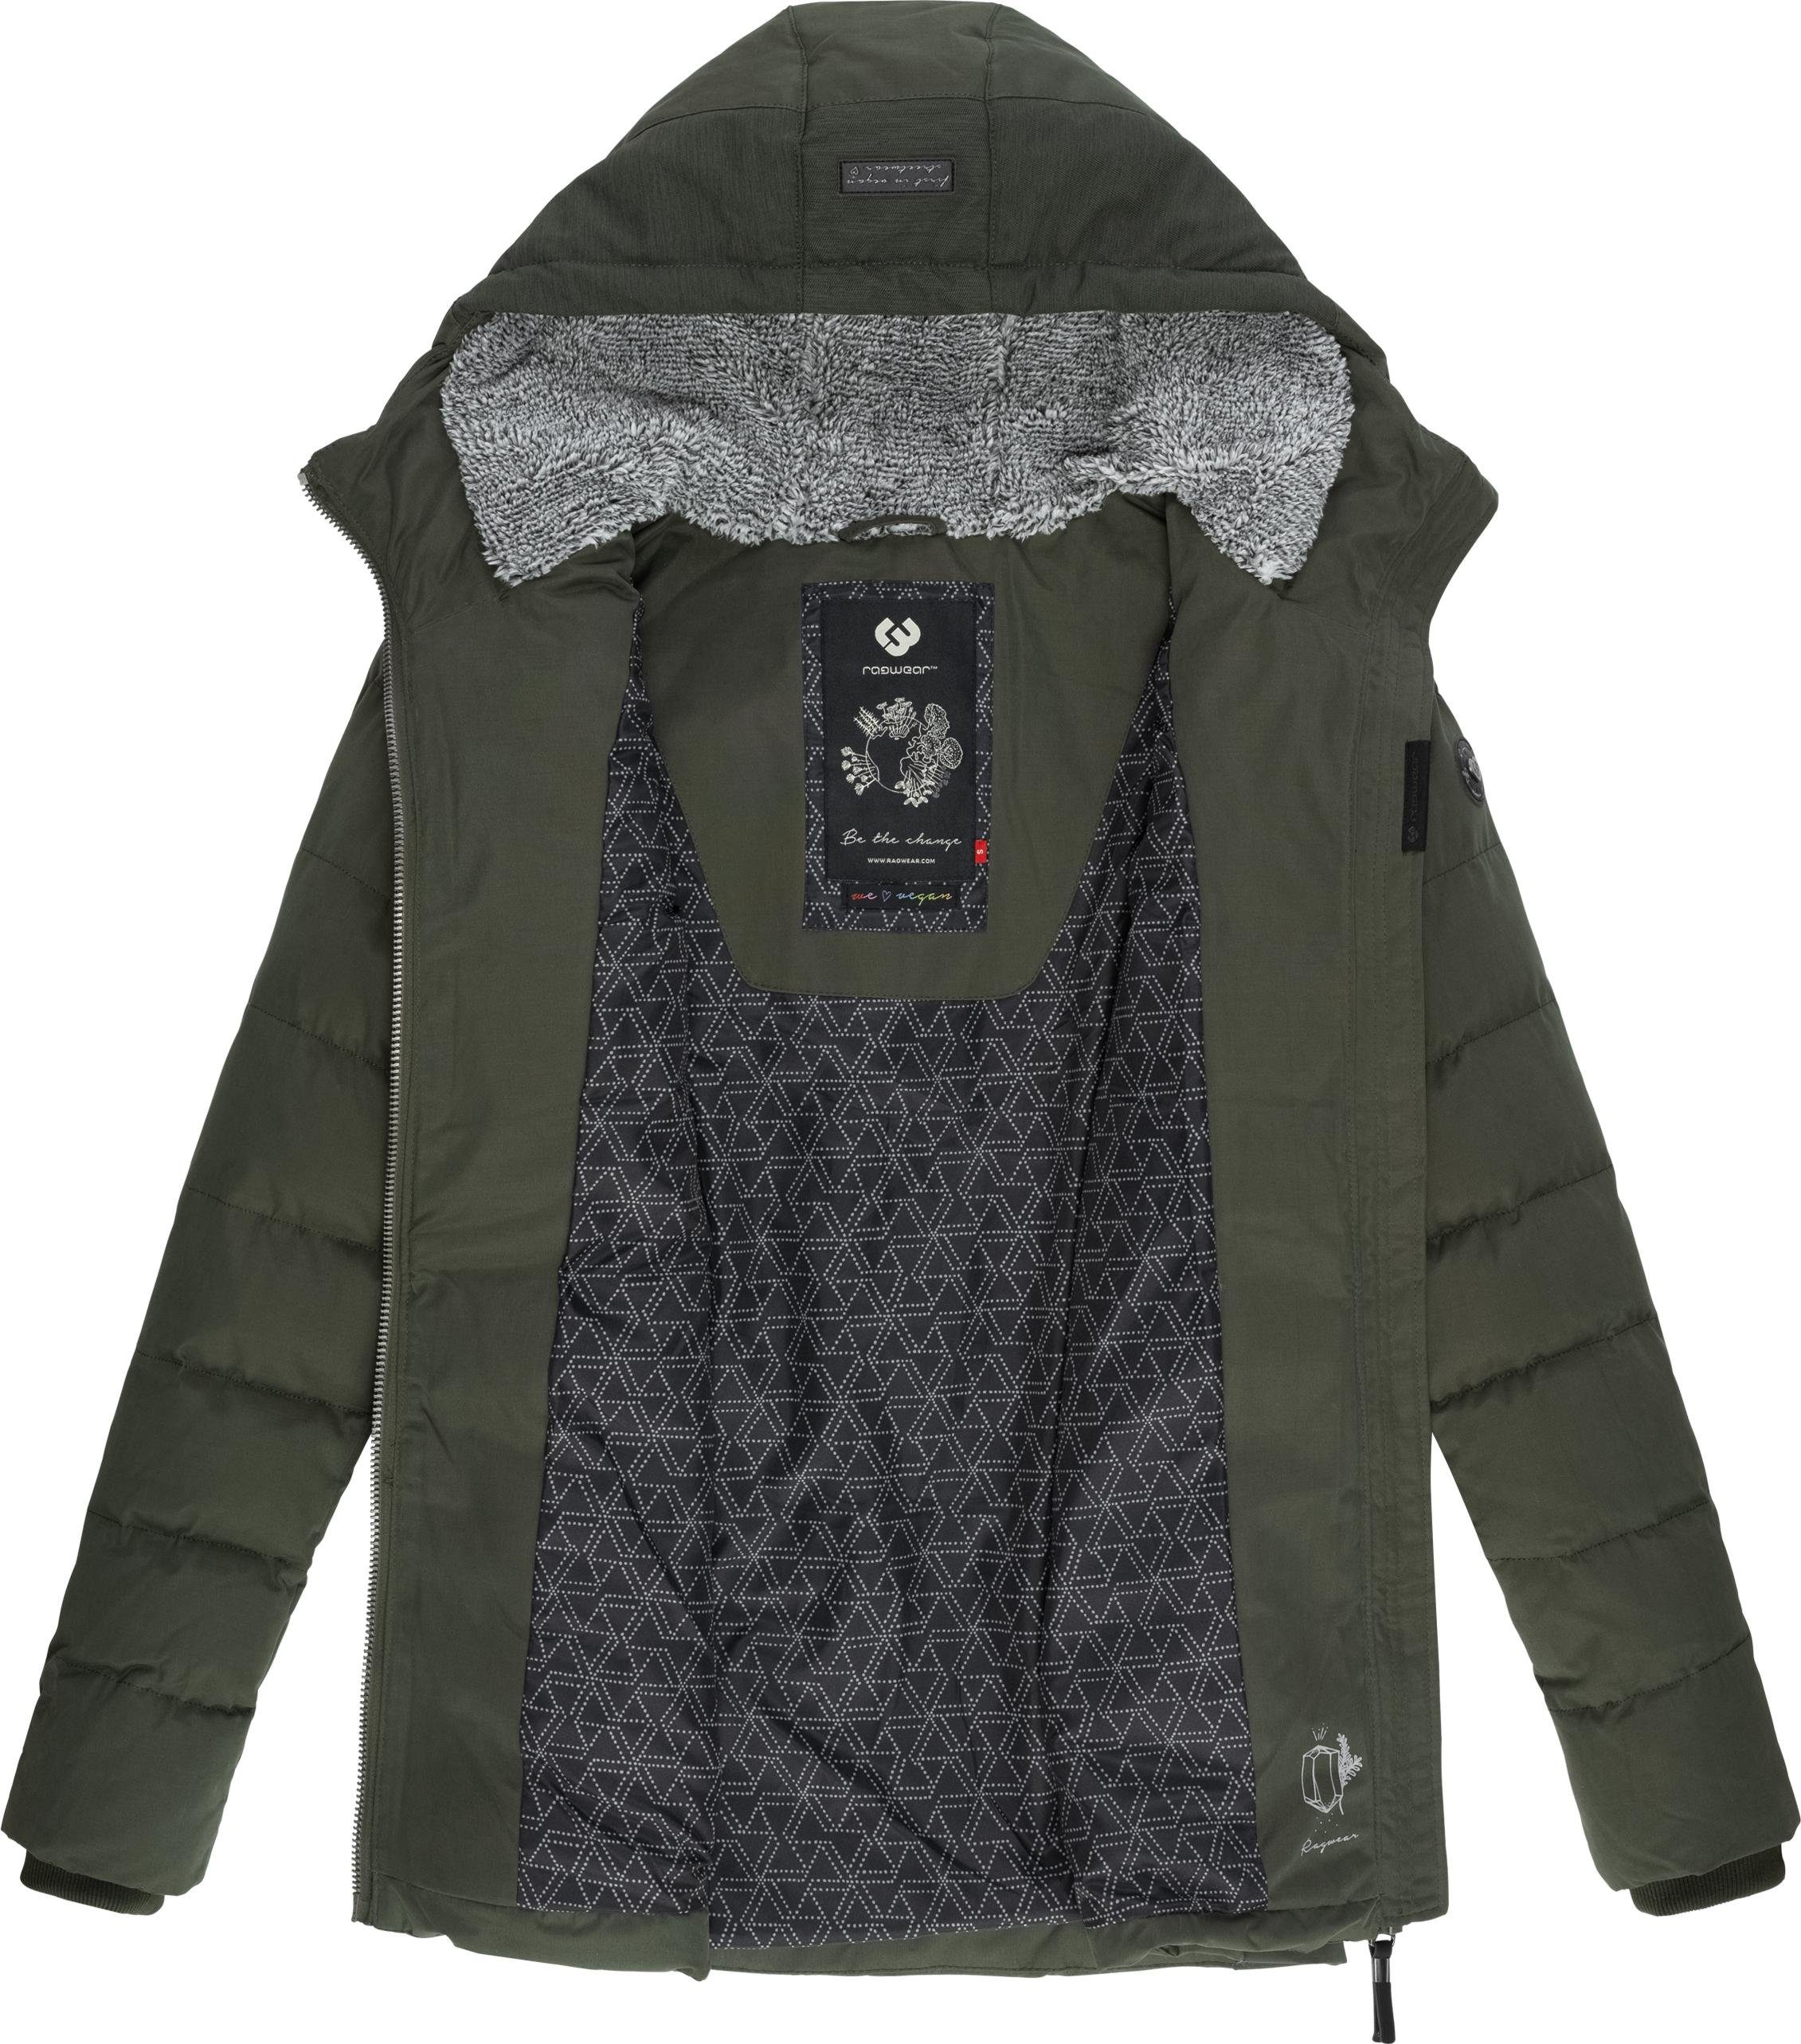 stylische olivgrün Steppjacke mit Winterjacke Quantic Teddyfell-Kapuze Ragwear